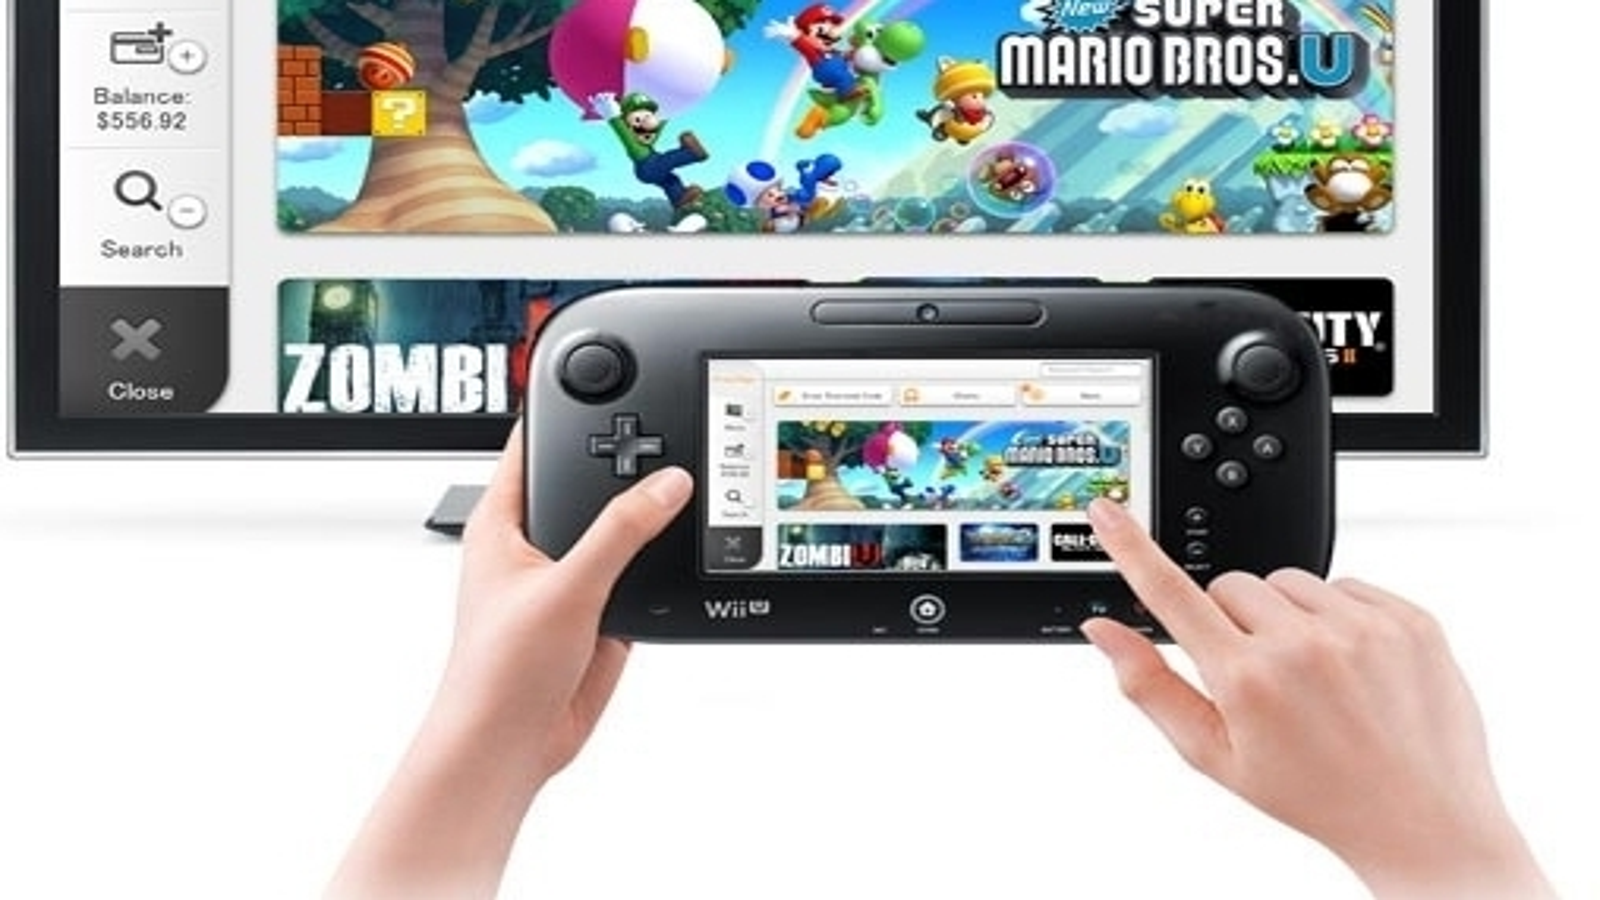 Nintendo is Erasing the Wii U - KeenGamer